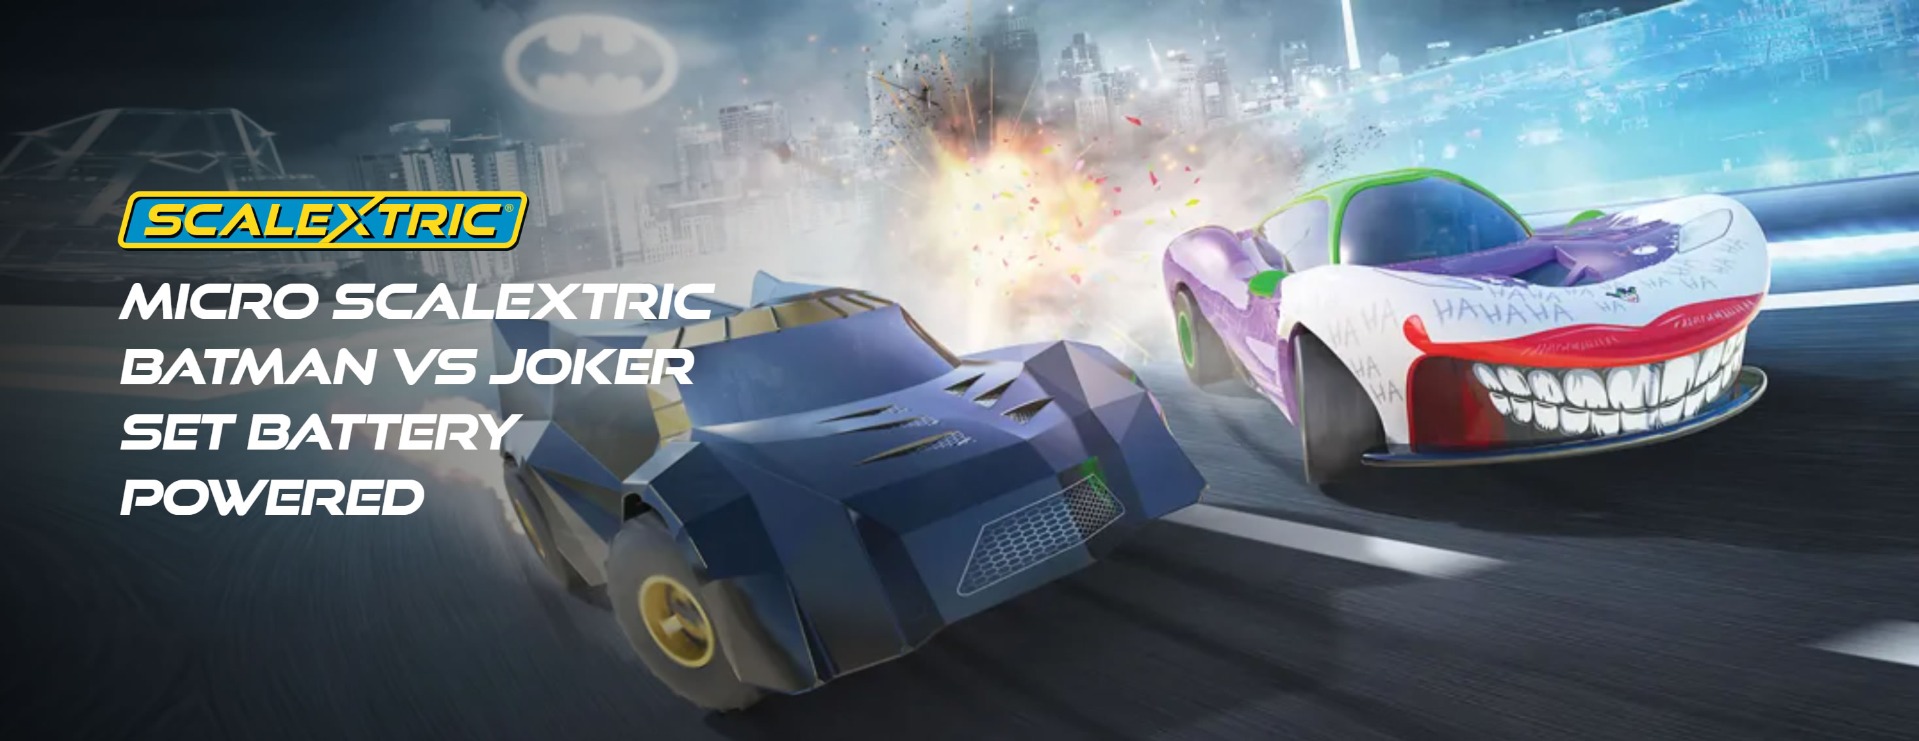 Micro Scalextric Batman vs Joker Set Battery Powered Race Set # 1155M